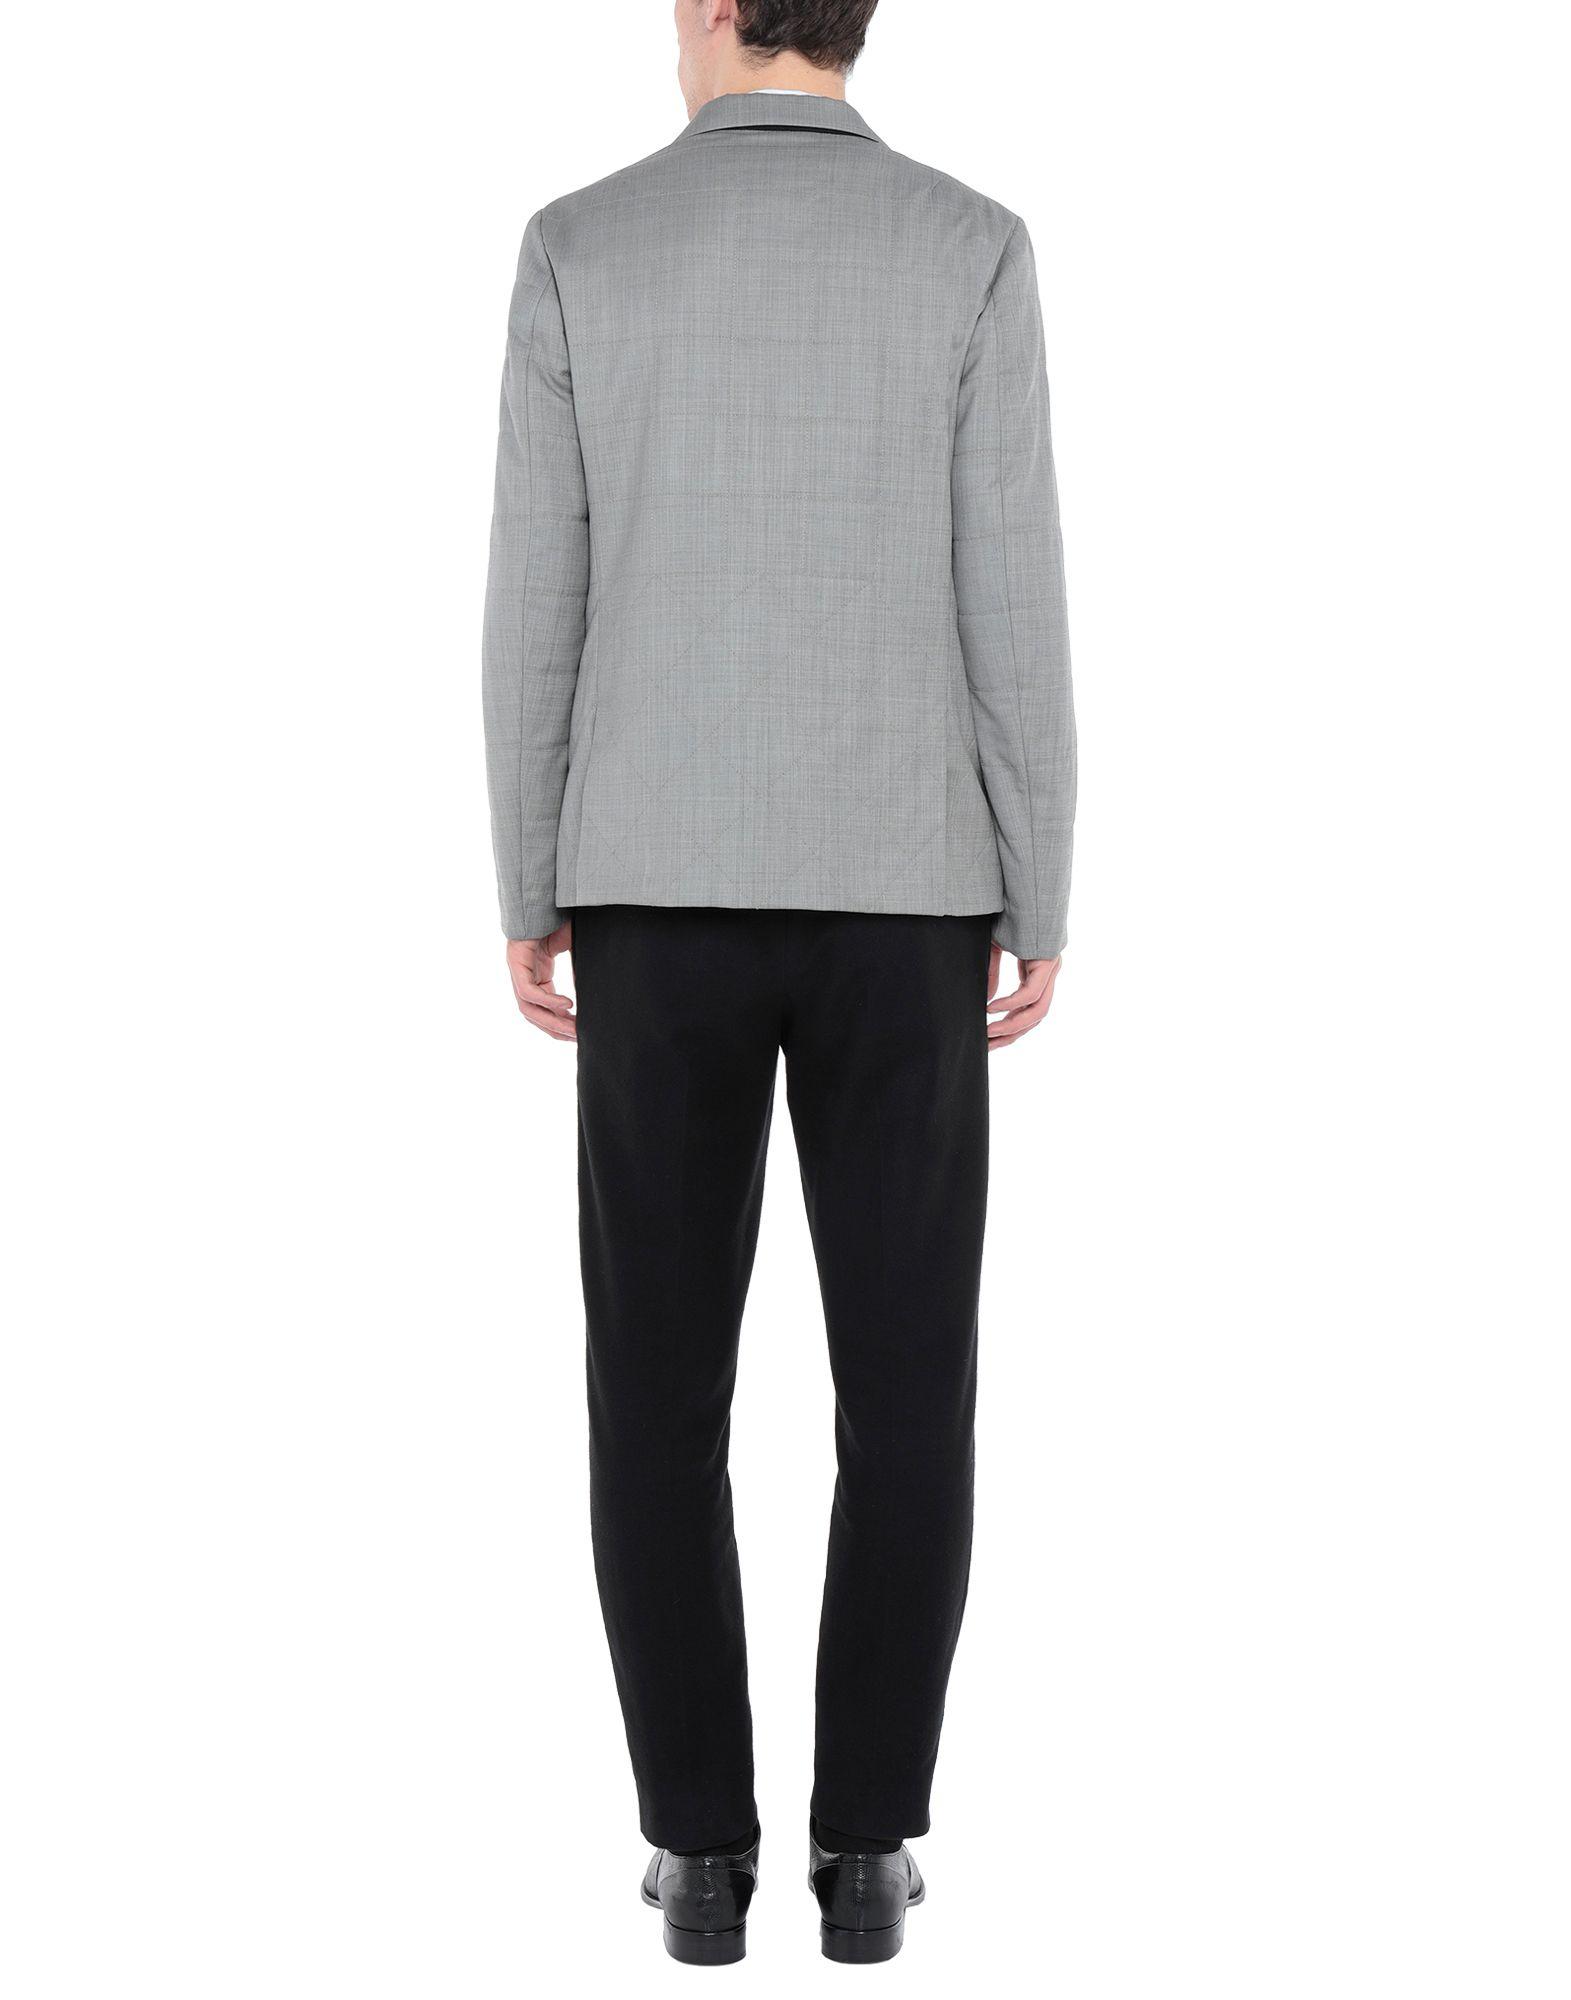 Versace Wool Blazer in Grey (Gray) for Men - Lyst